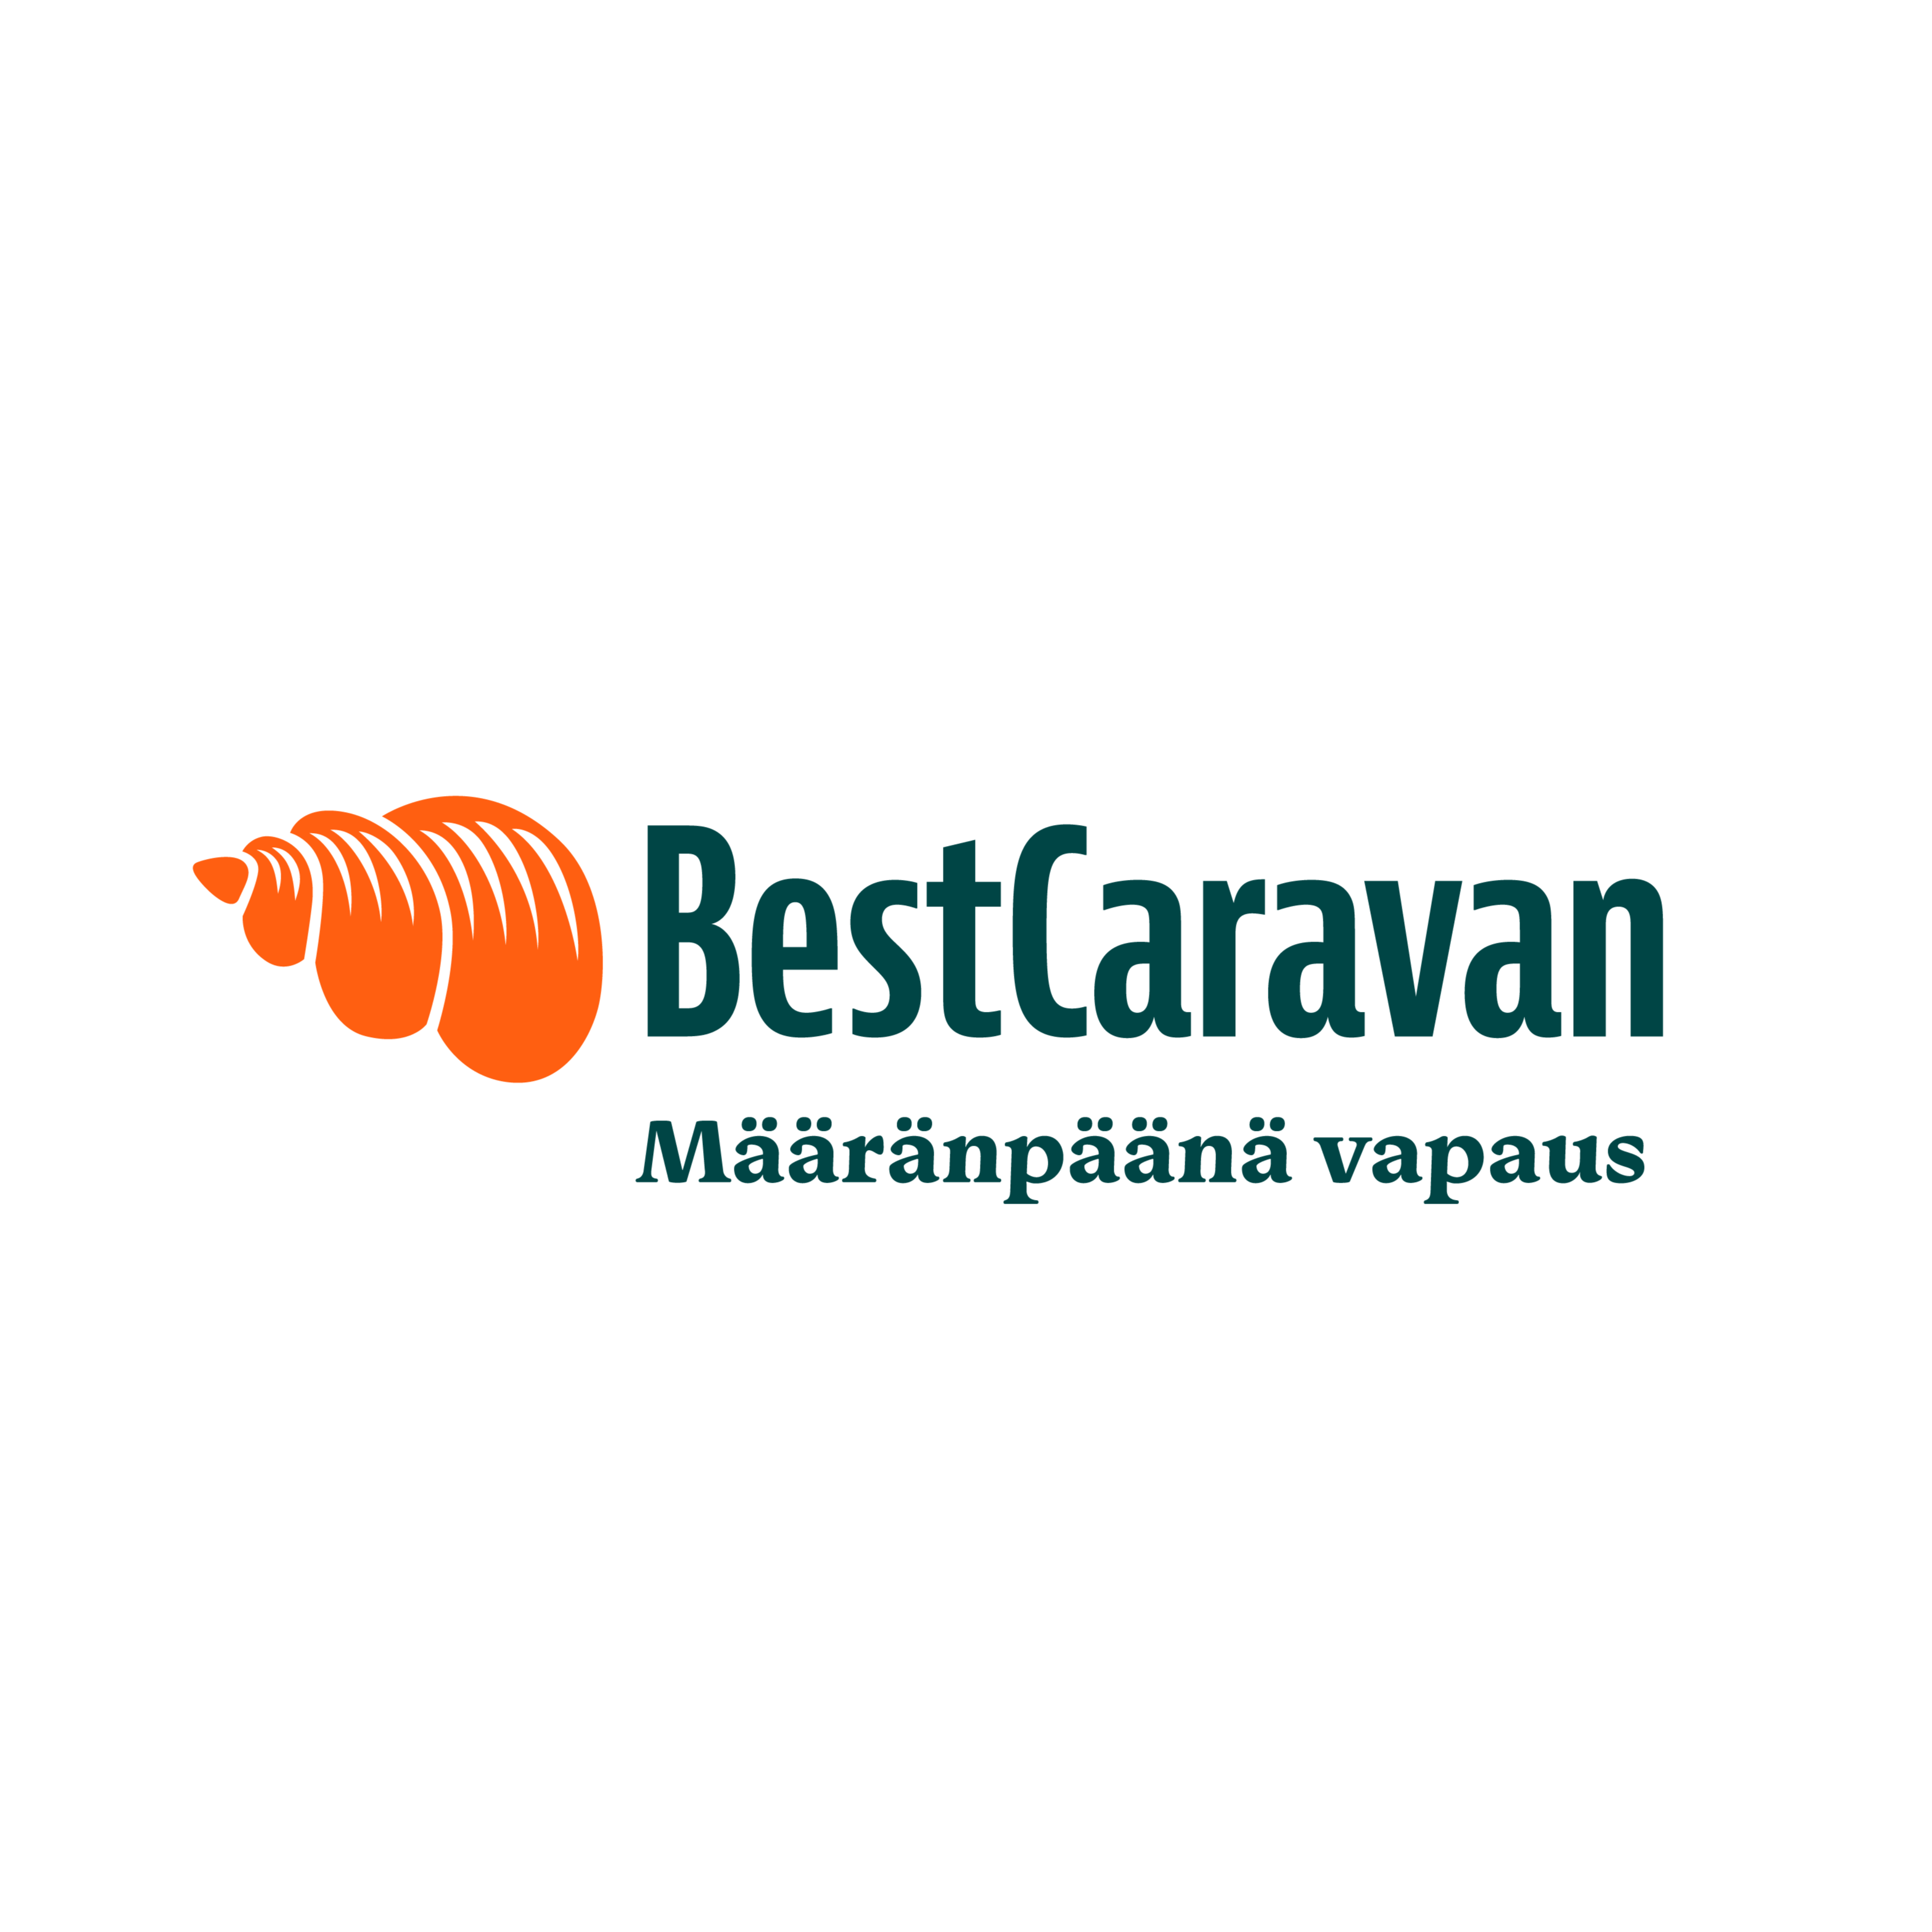 Best Caravan Turku Logo